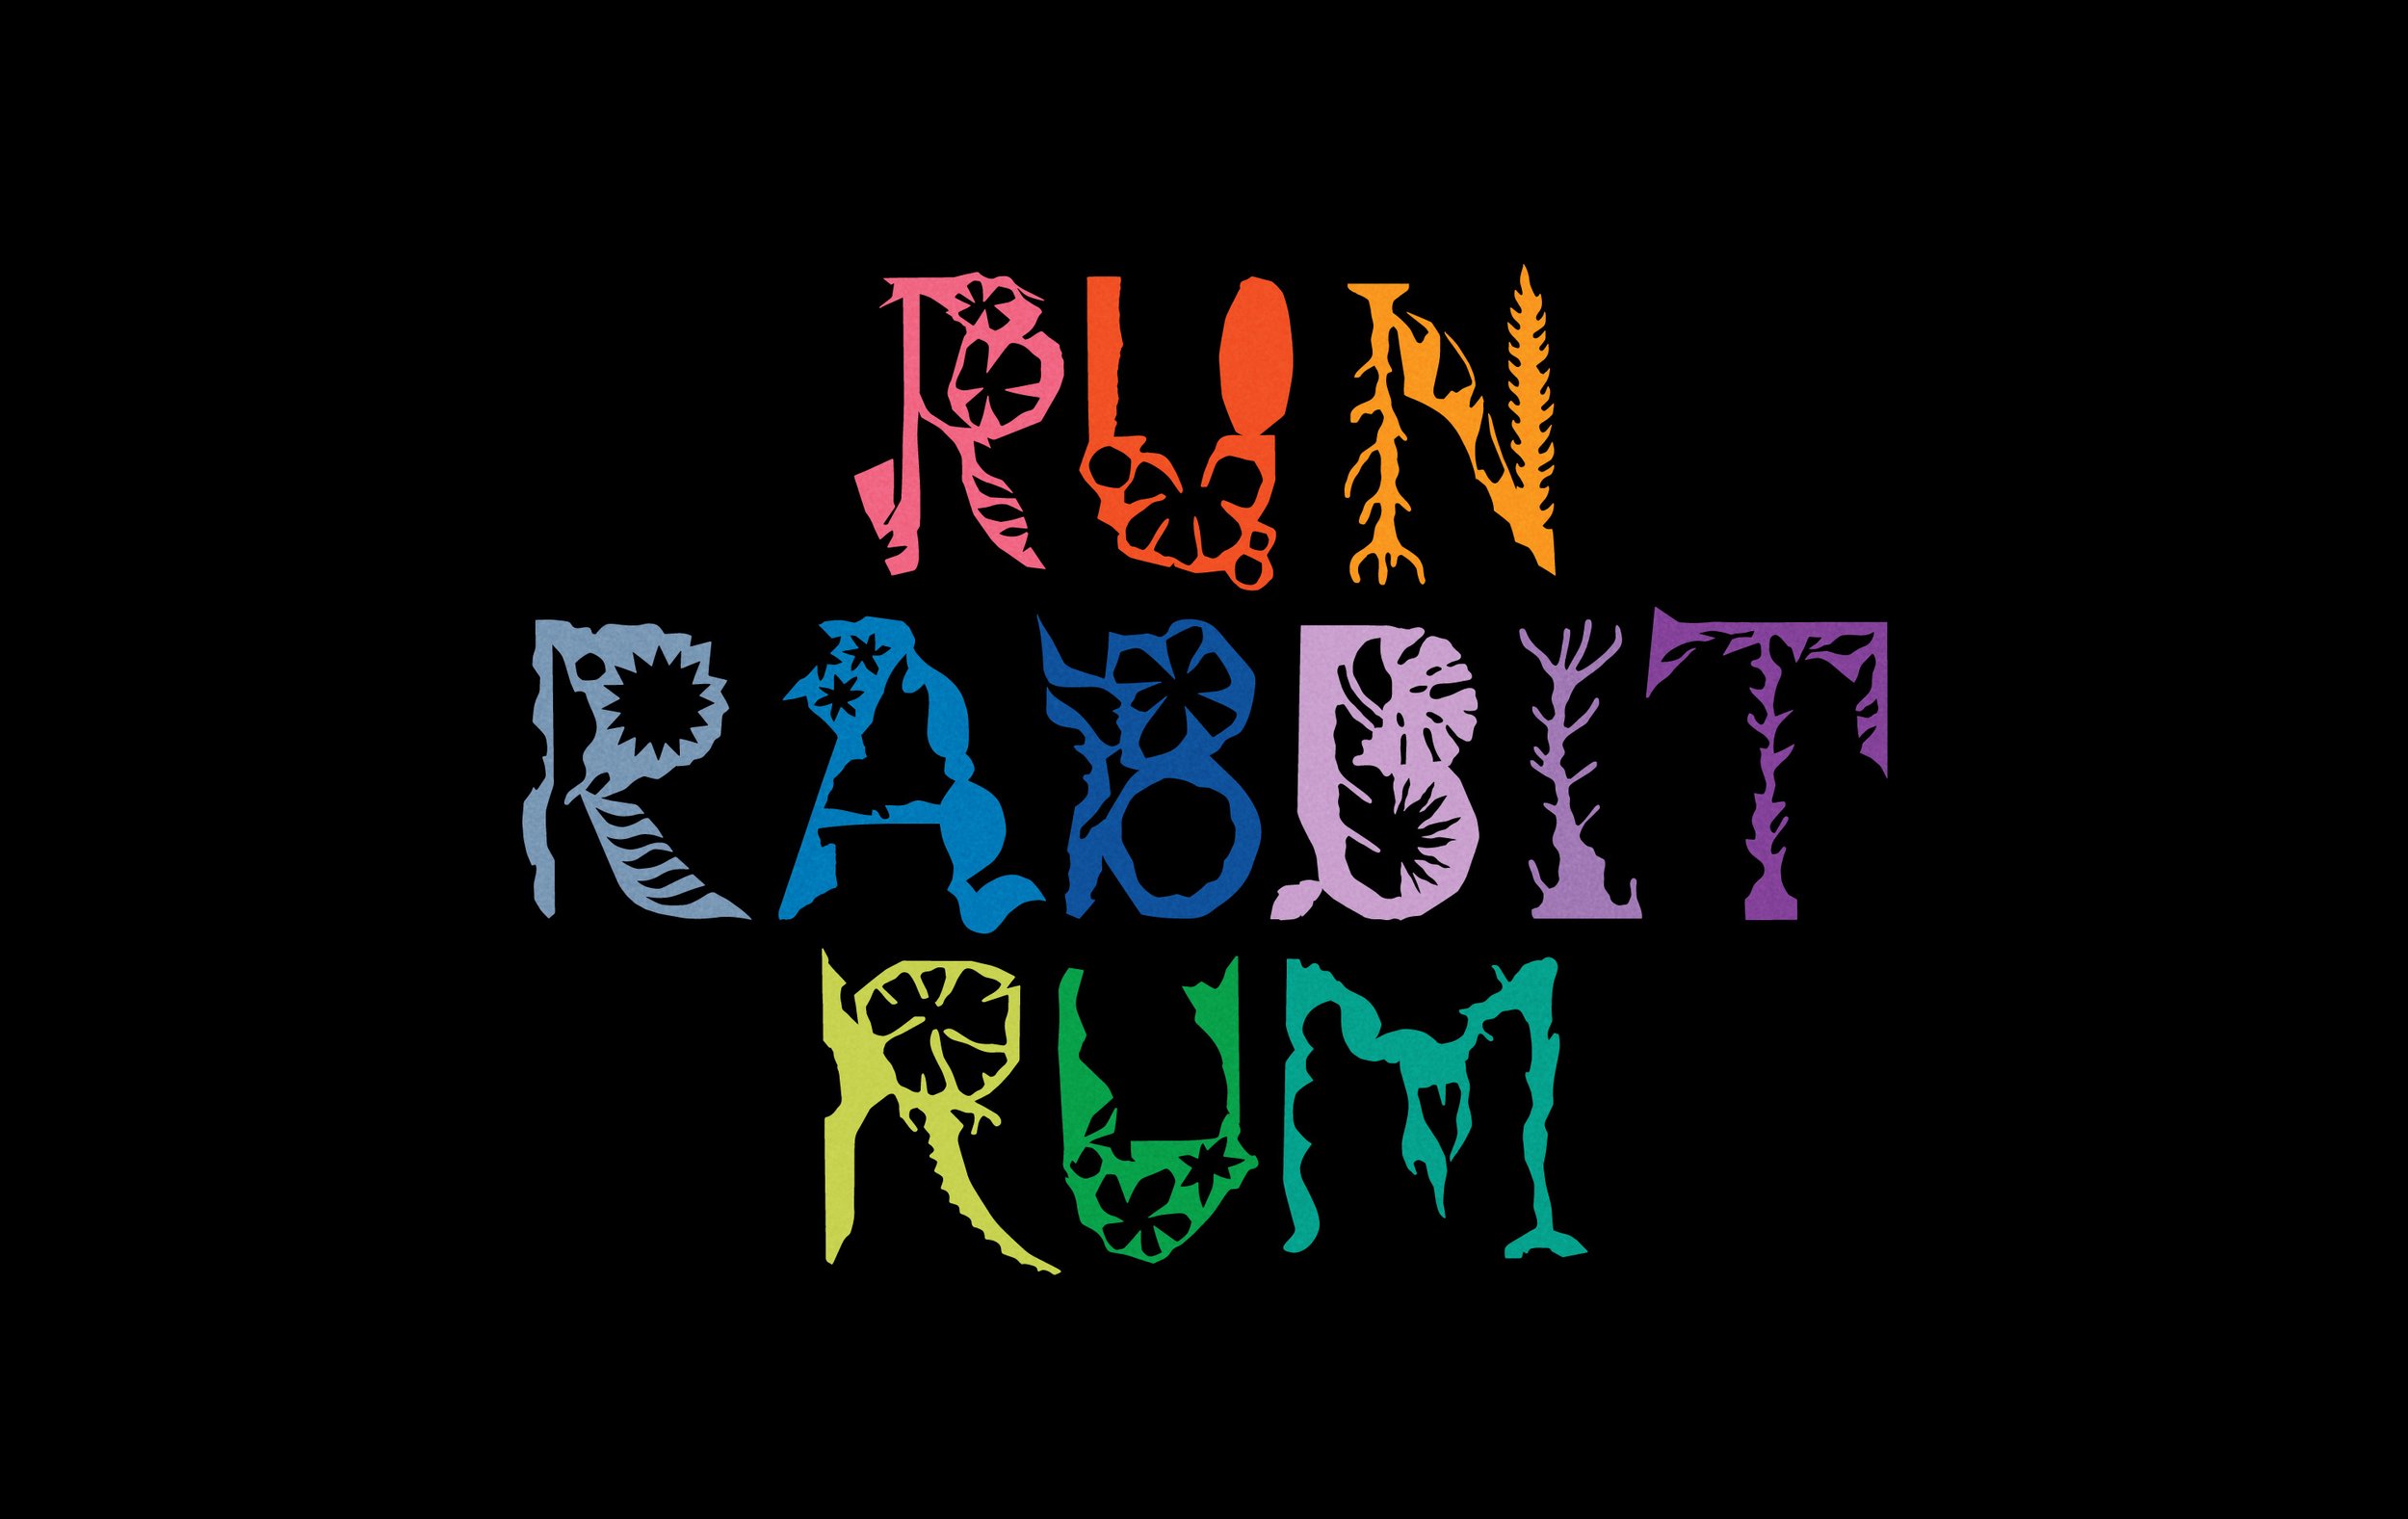 Nick-Liefhebber-Run-Rabbit-Rum-Lettering.jpg